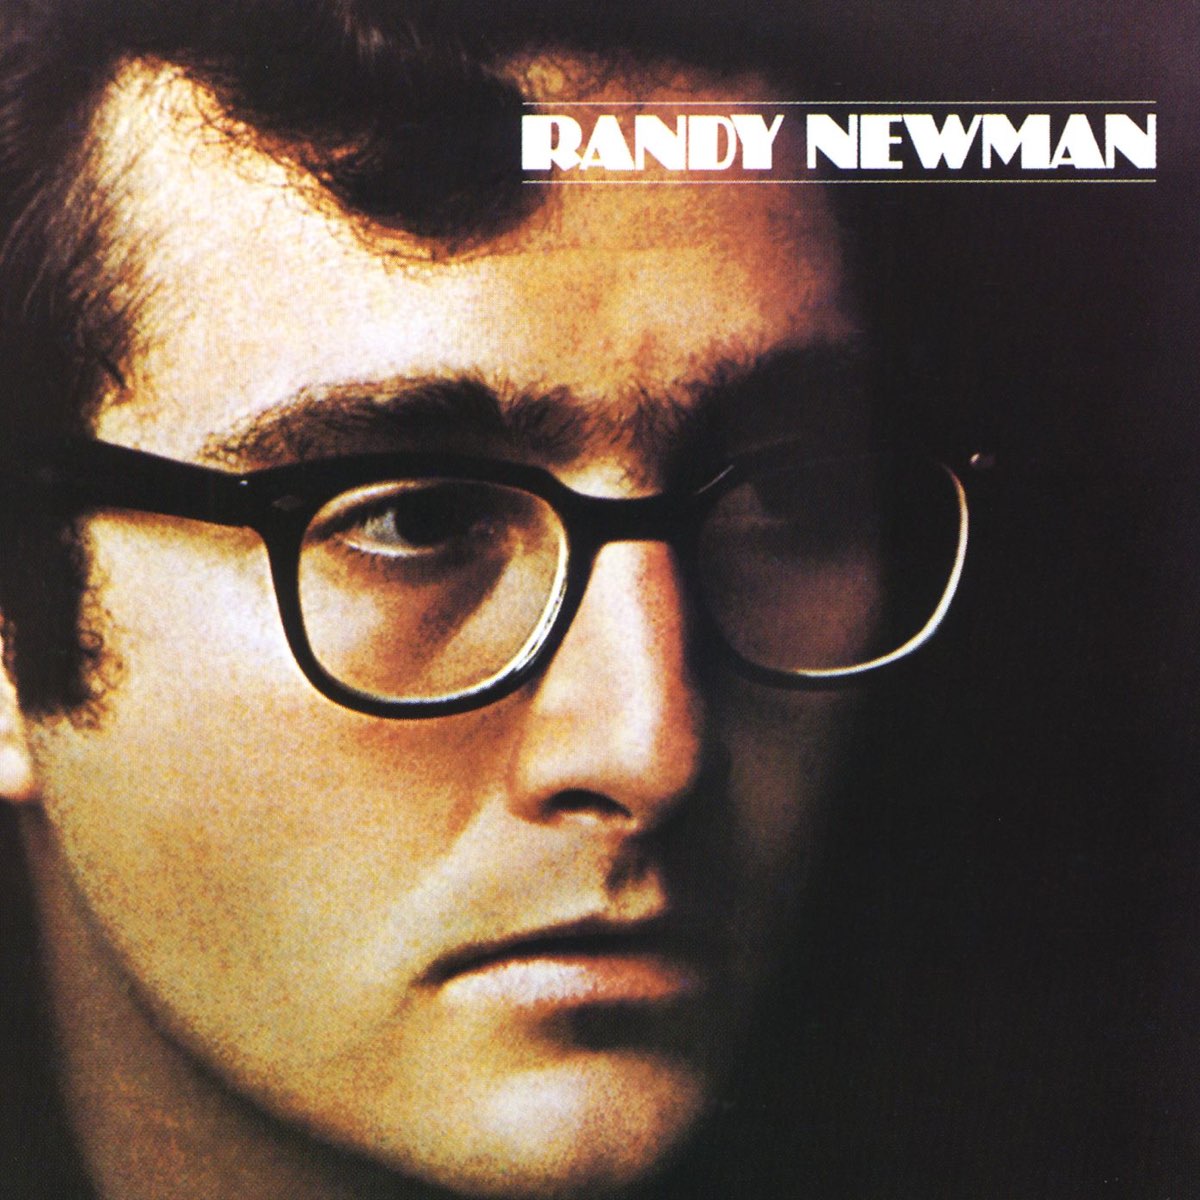 ‎Randy Newman by Randy Newman on Apple Music